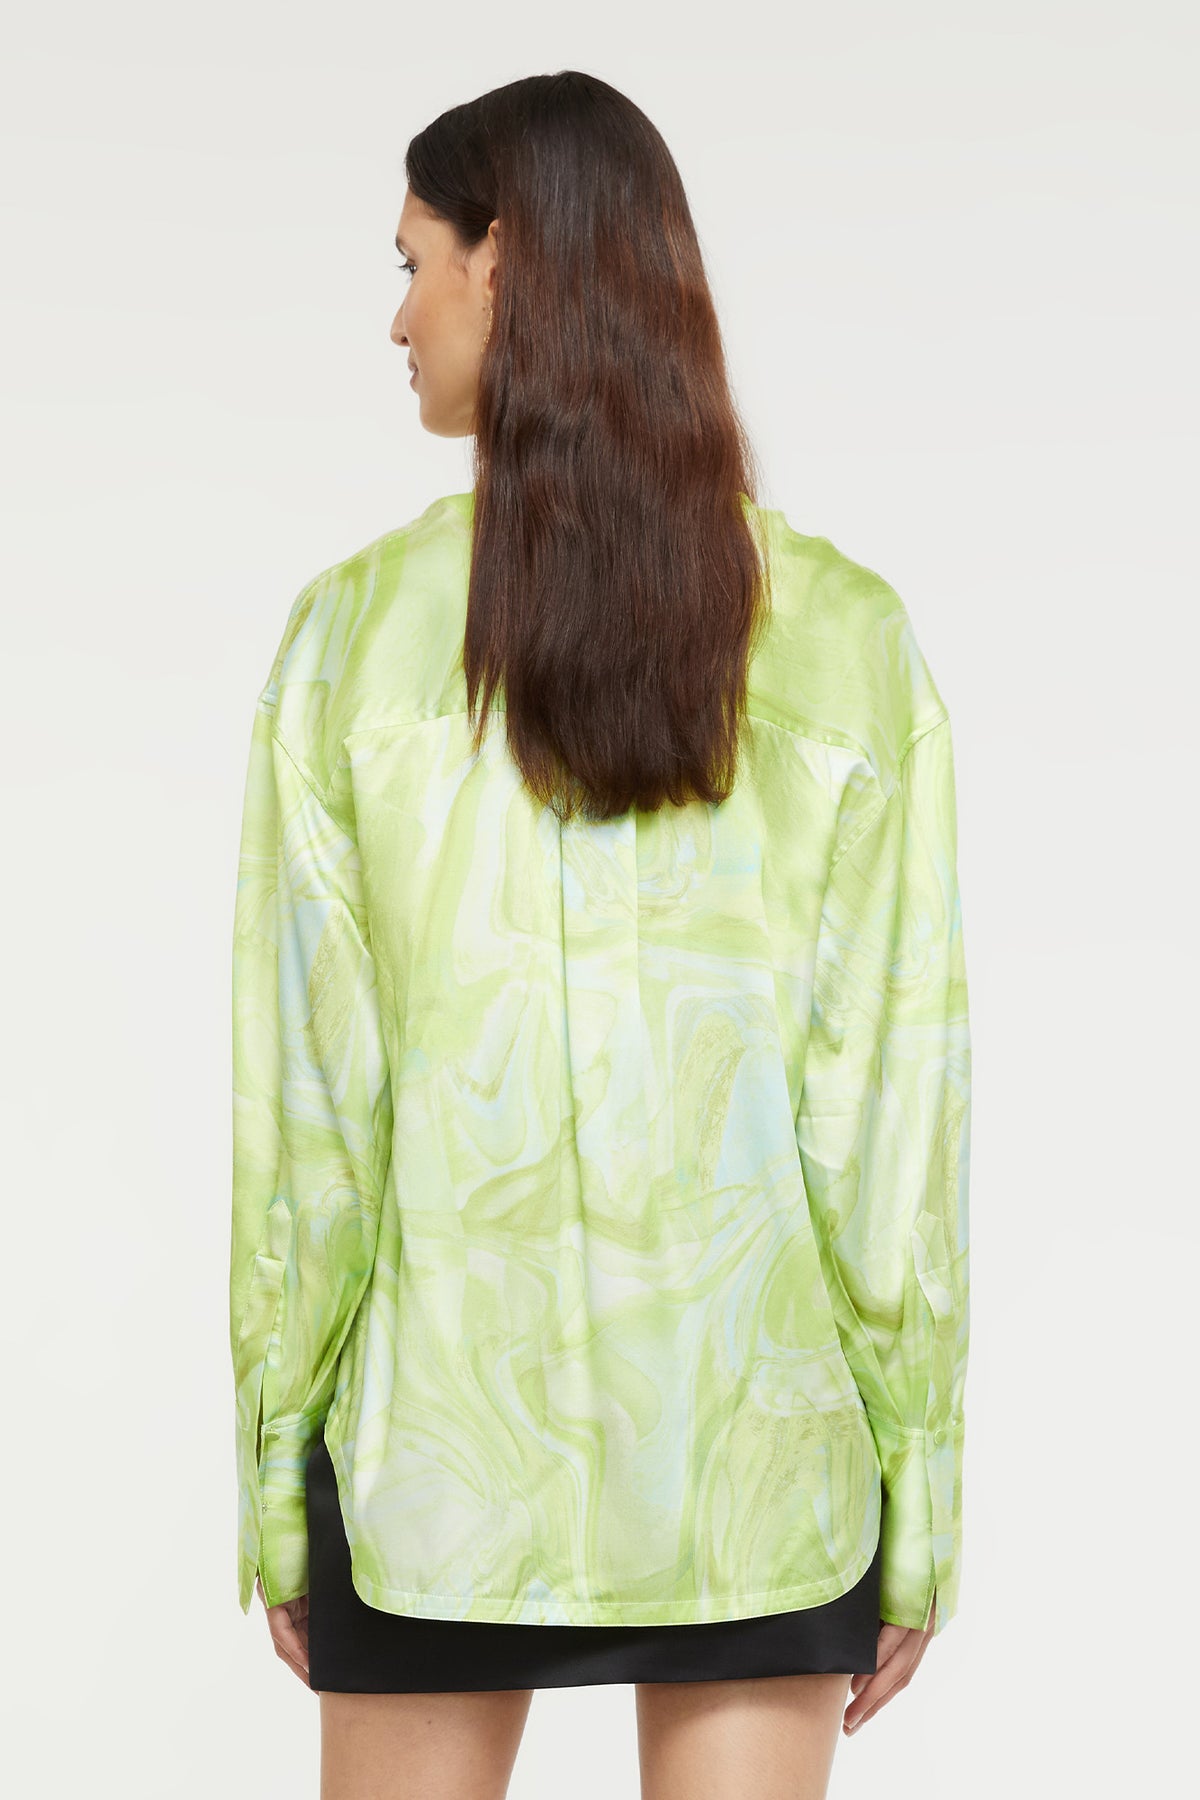 GINIA Gaia Shirt in Lime Swirl Print